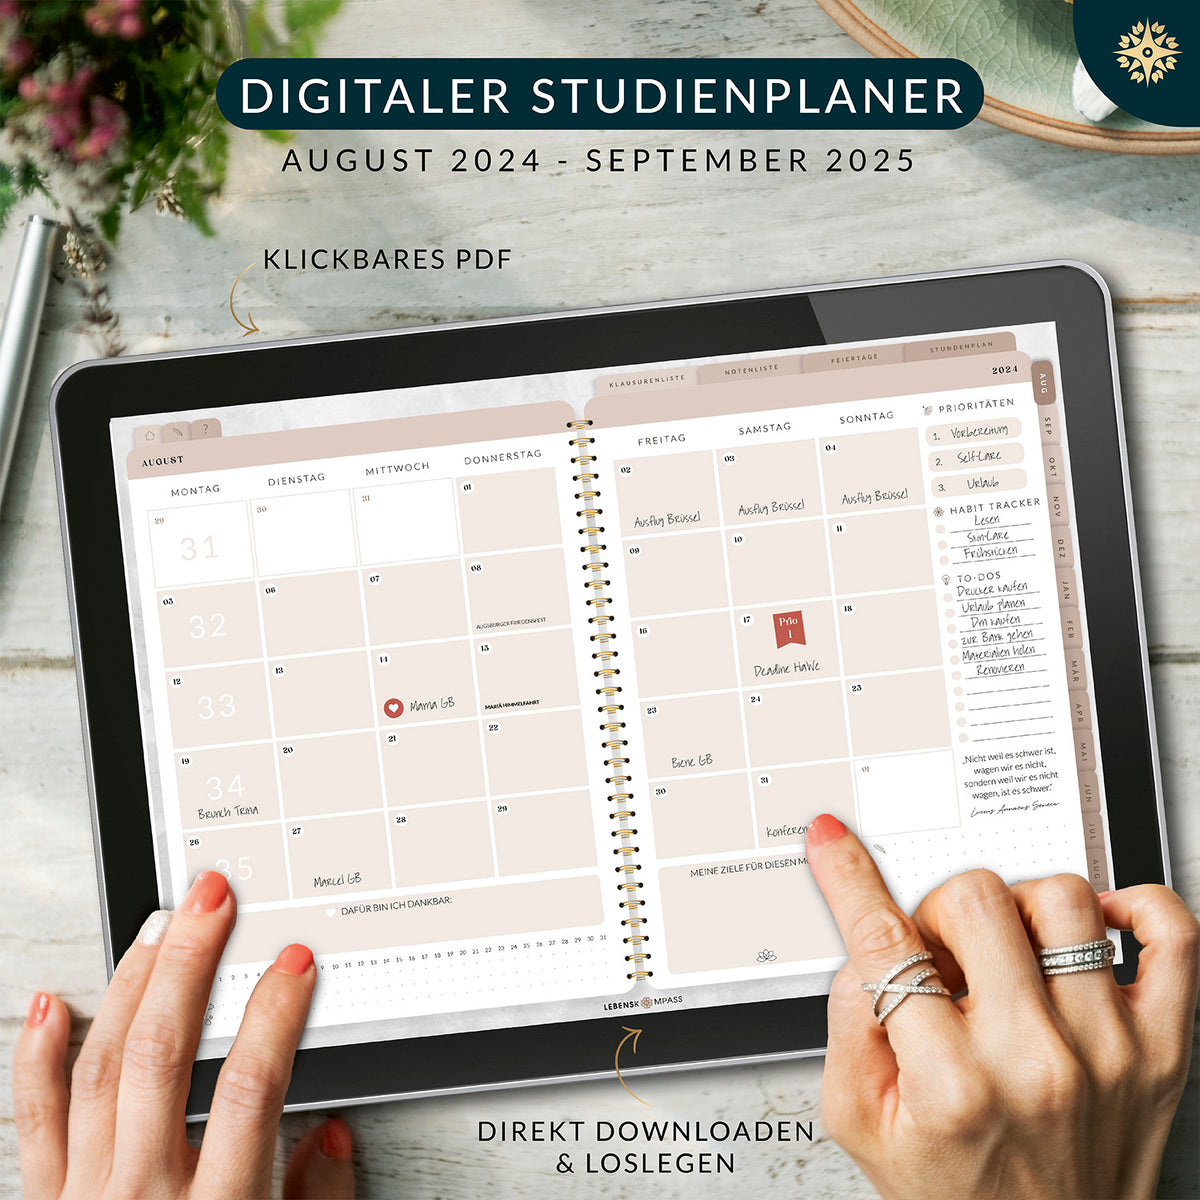 Digitaler Studienplaner - PDF mit Hyperlinks